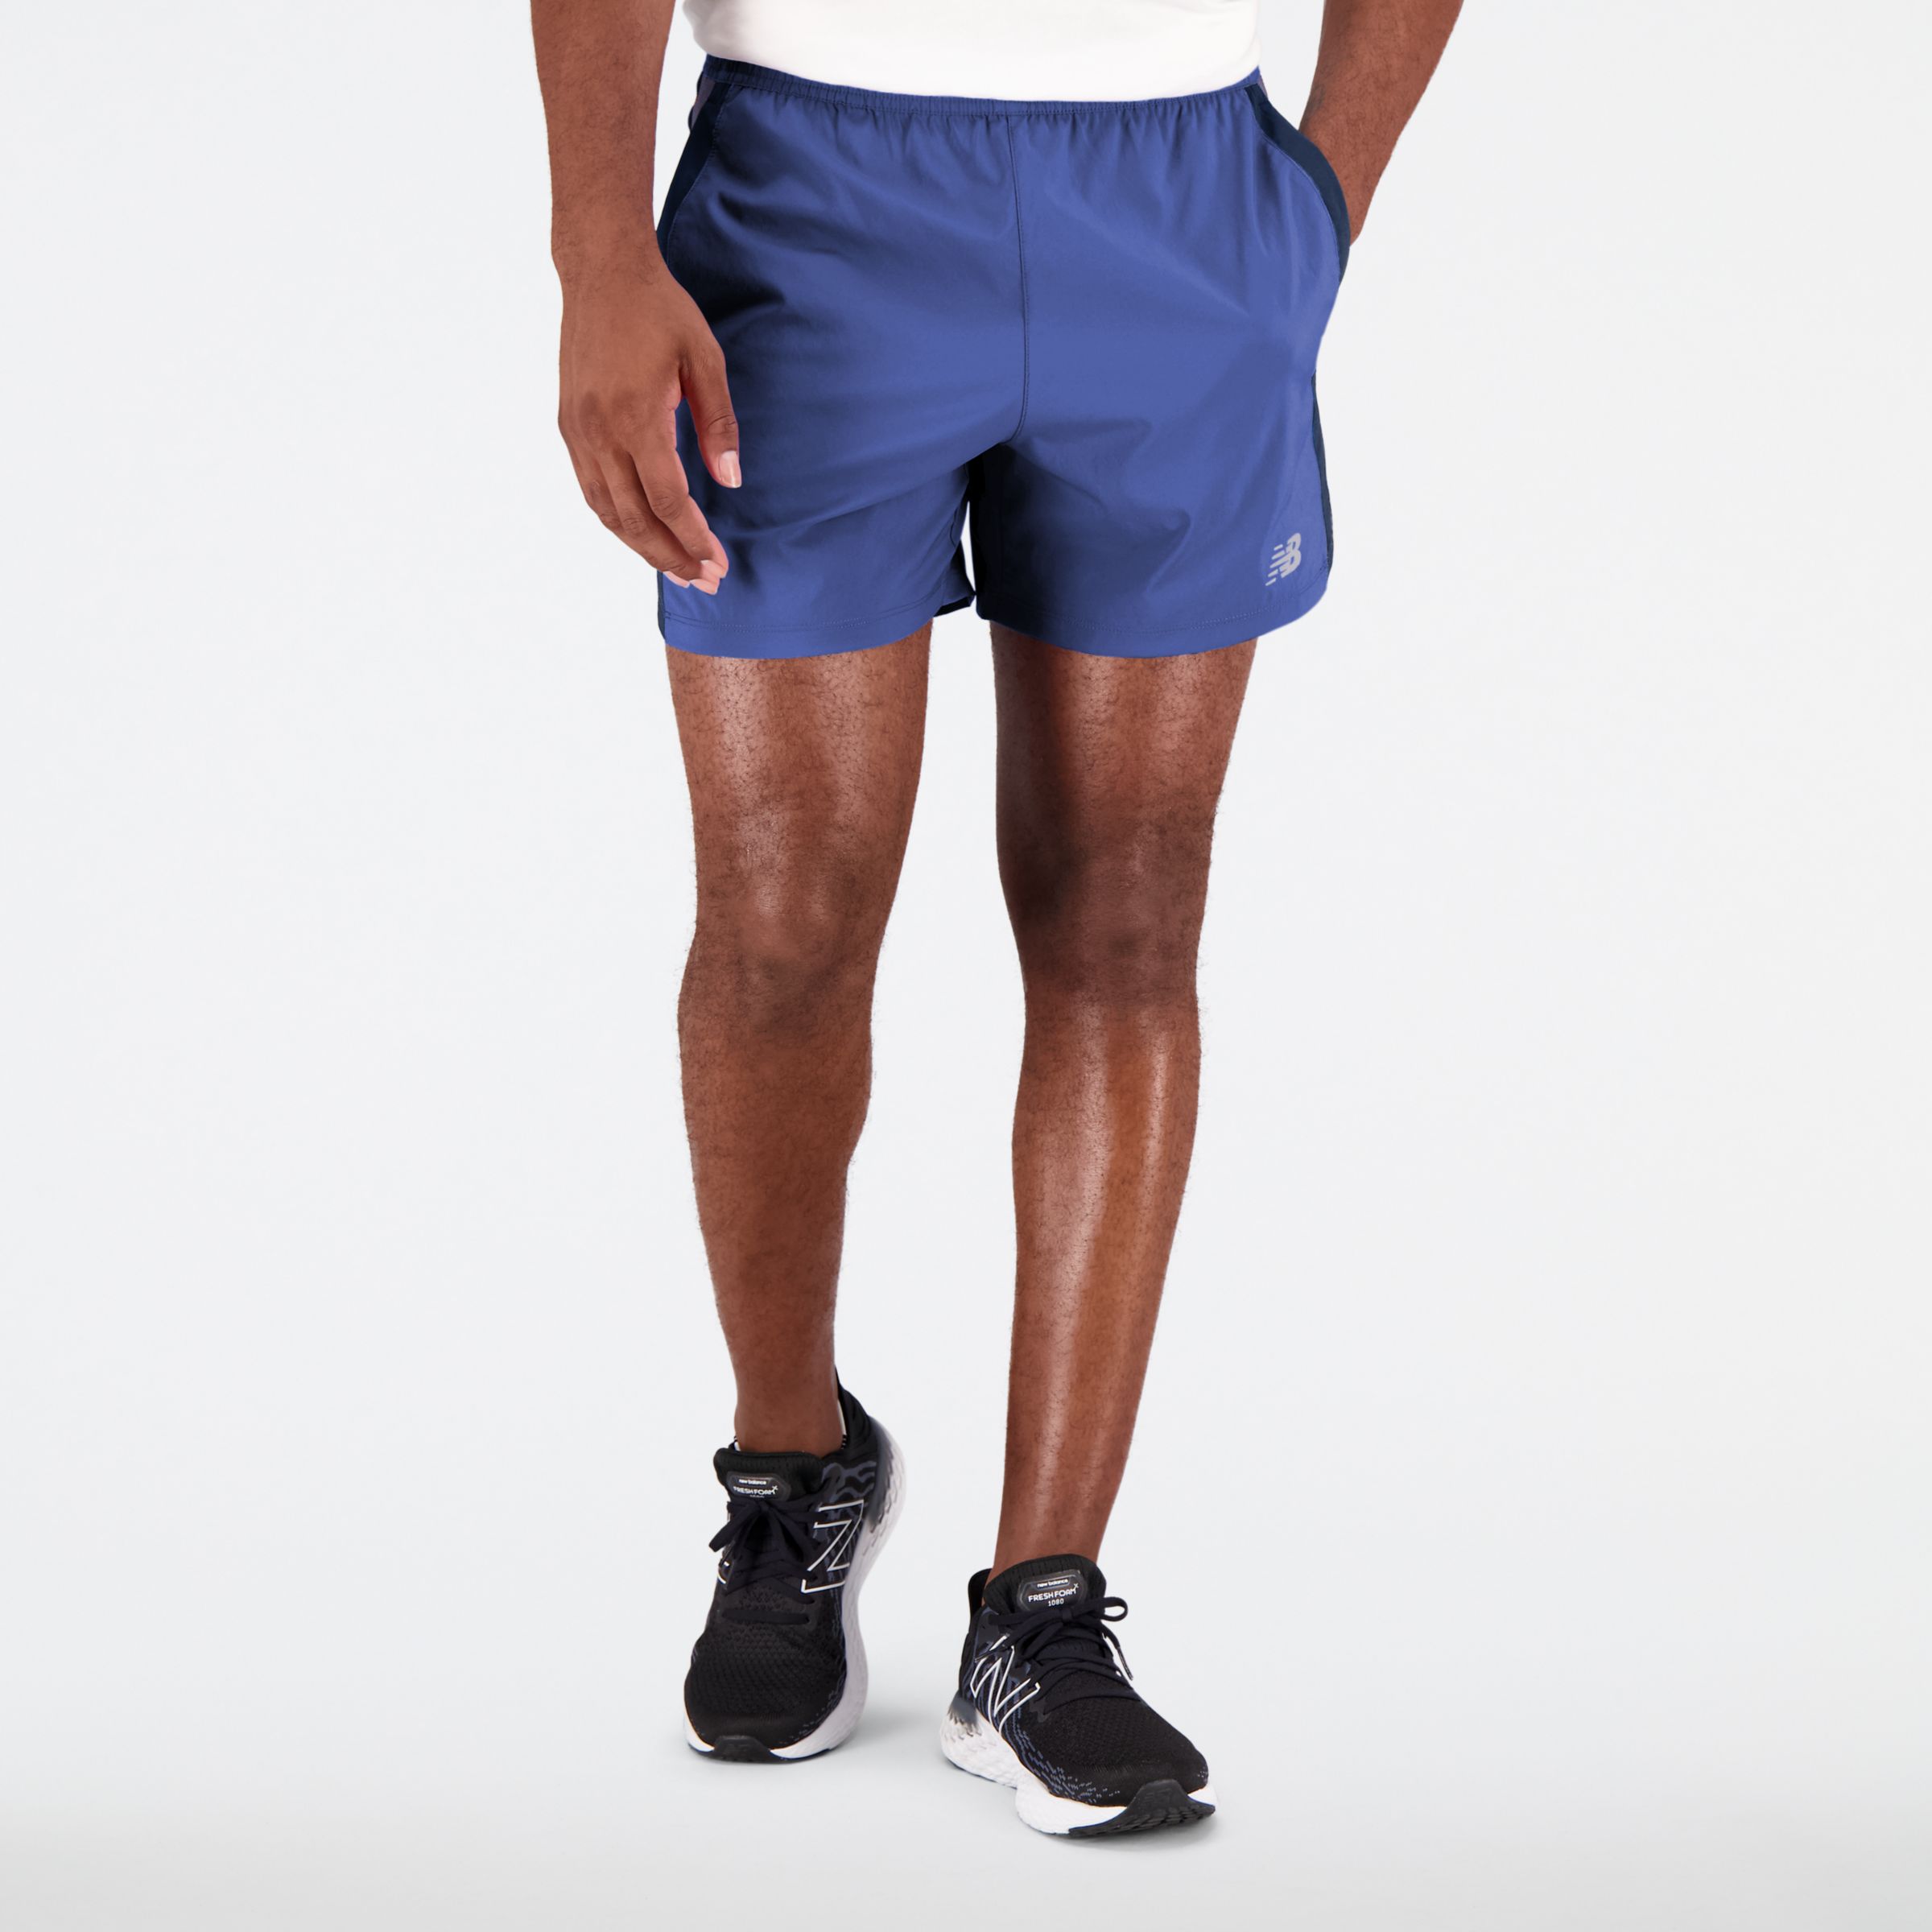 New Balance Accelerate 5 Inch Shorts 'Natural Indigo' - MS23228-NGO